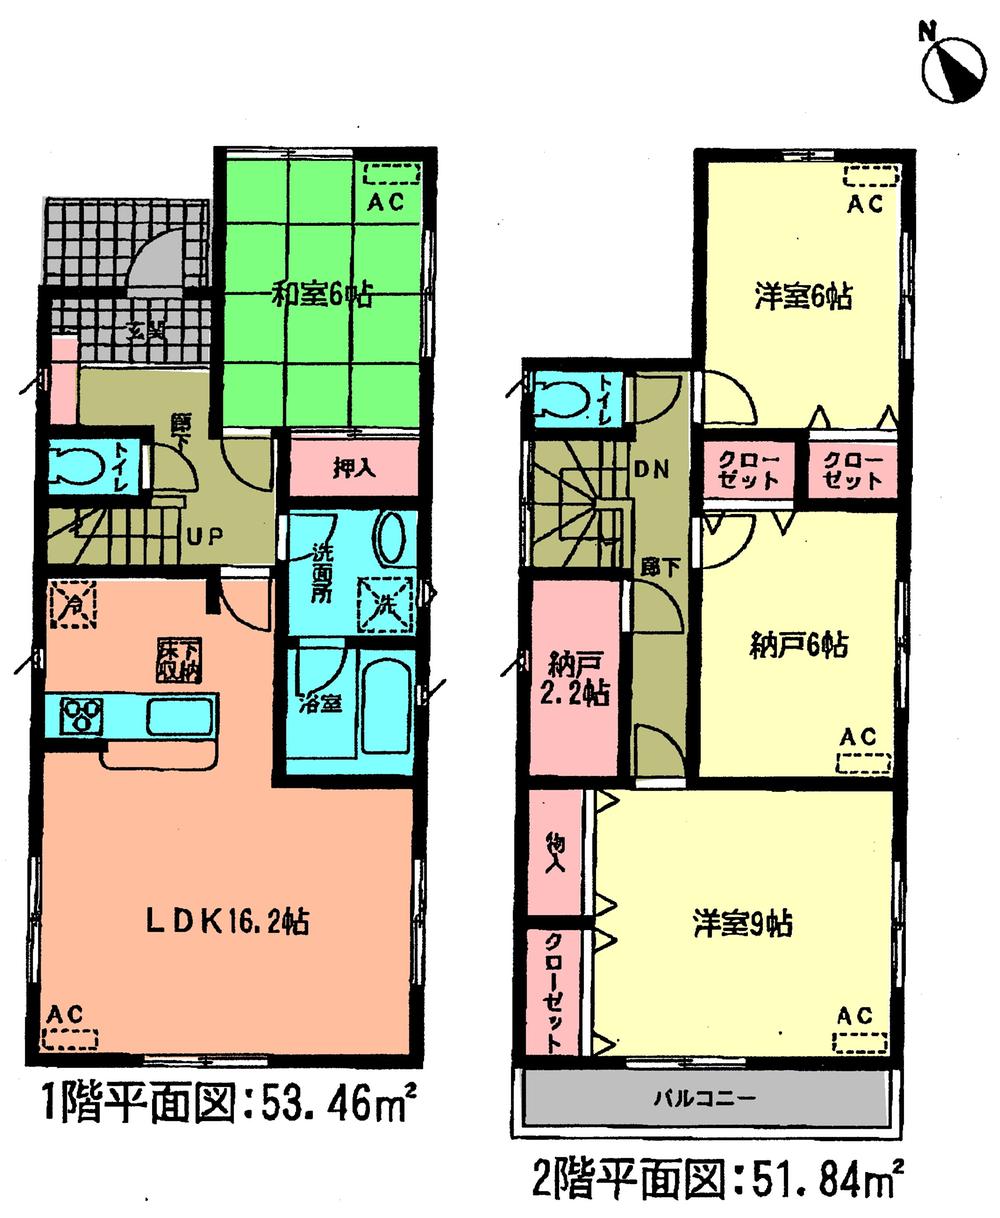 Floor plan. (4 Building), Price 22,900,000 yen, 3LDK+S, Land area 161.65 sq m , Building area 105.3 sq m